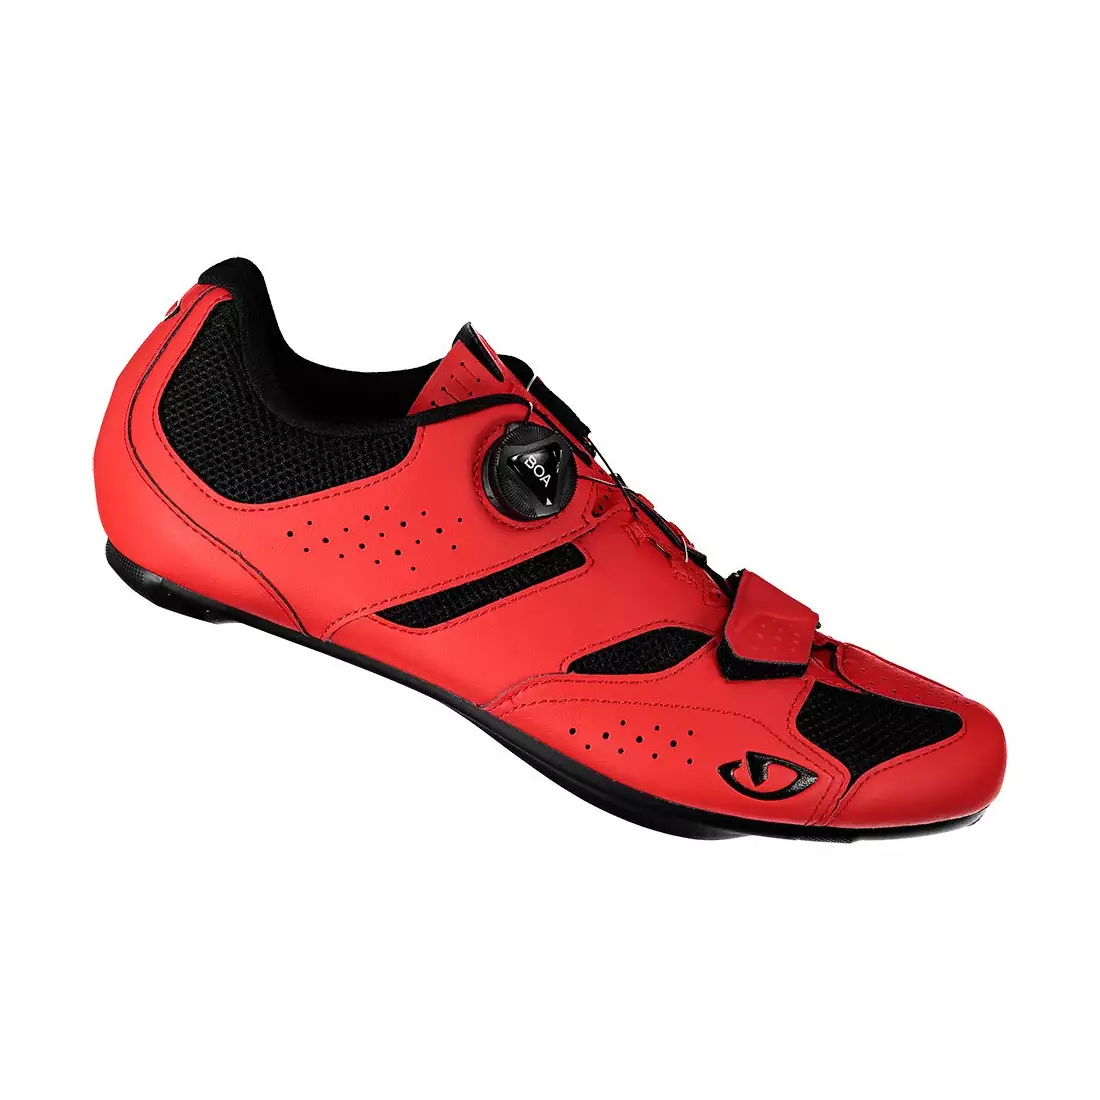 GIRO men's bicycle shoes SAVIX II bright red GR-7126180